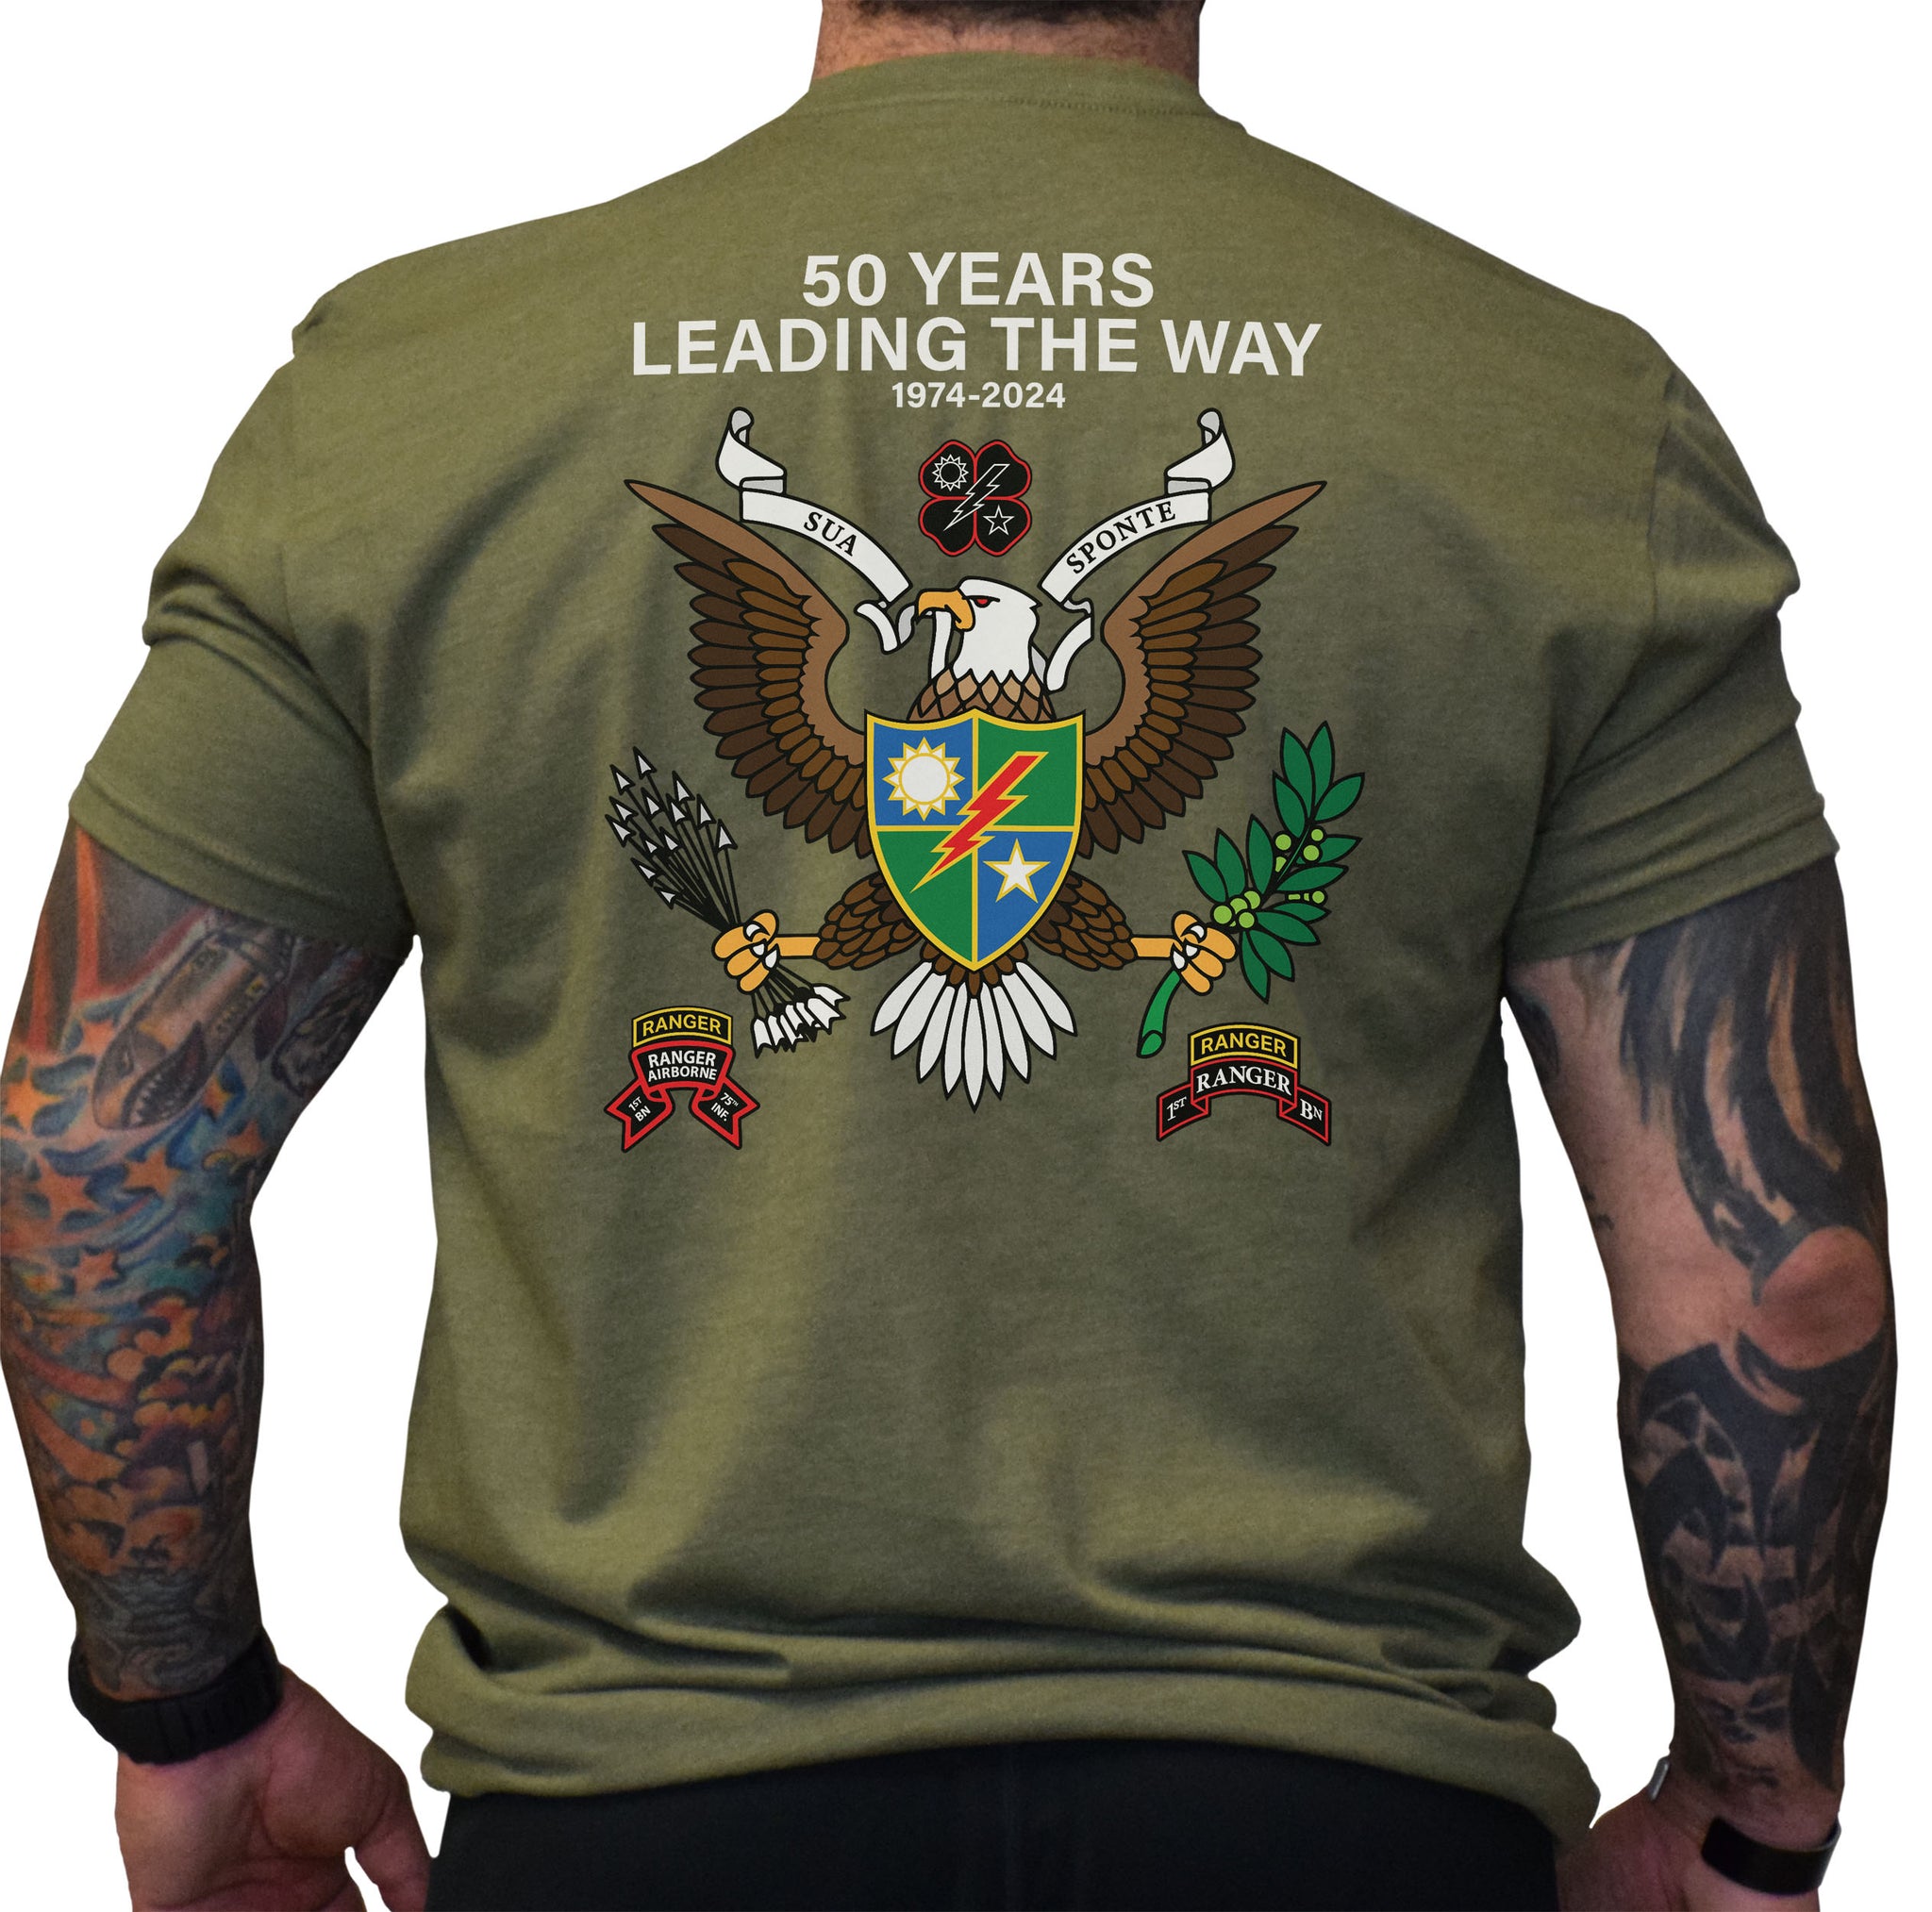 1st Batt 50th Anniversary War Eagle Shirt